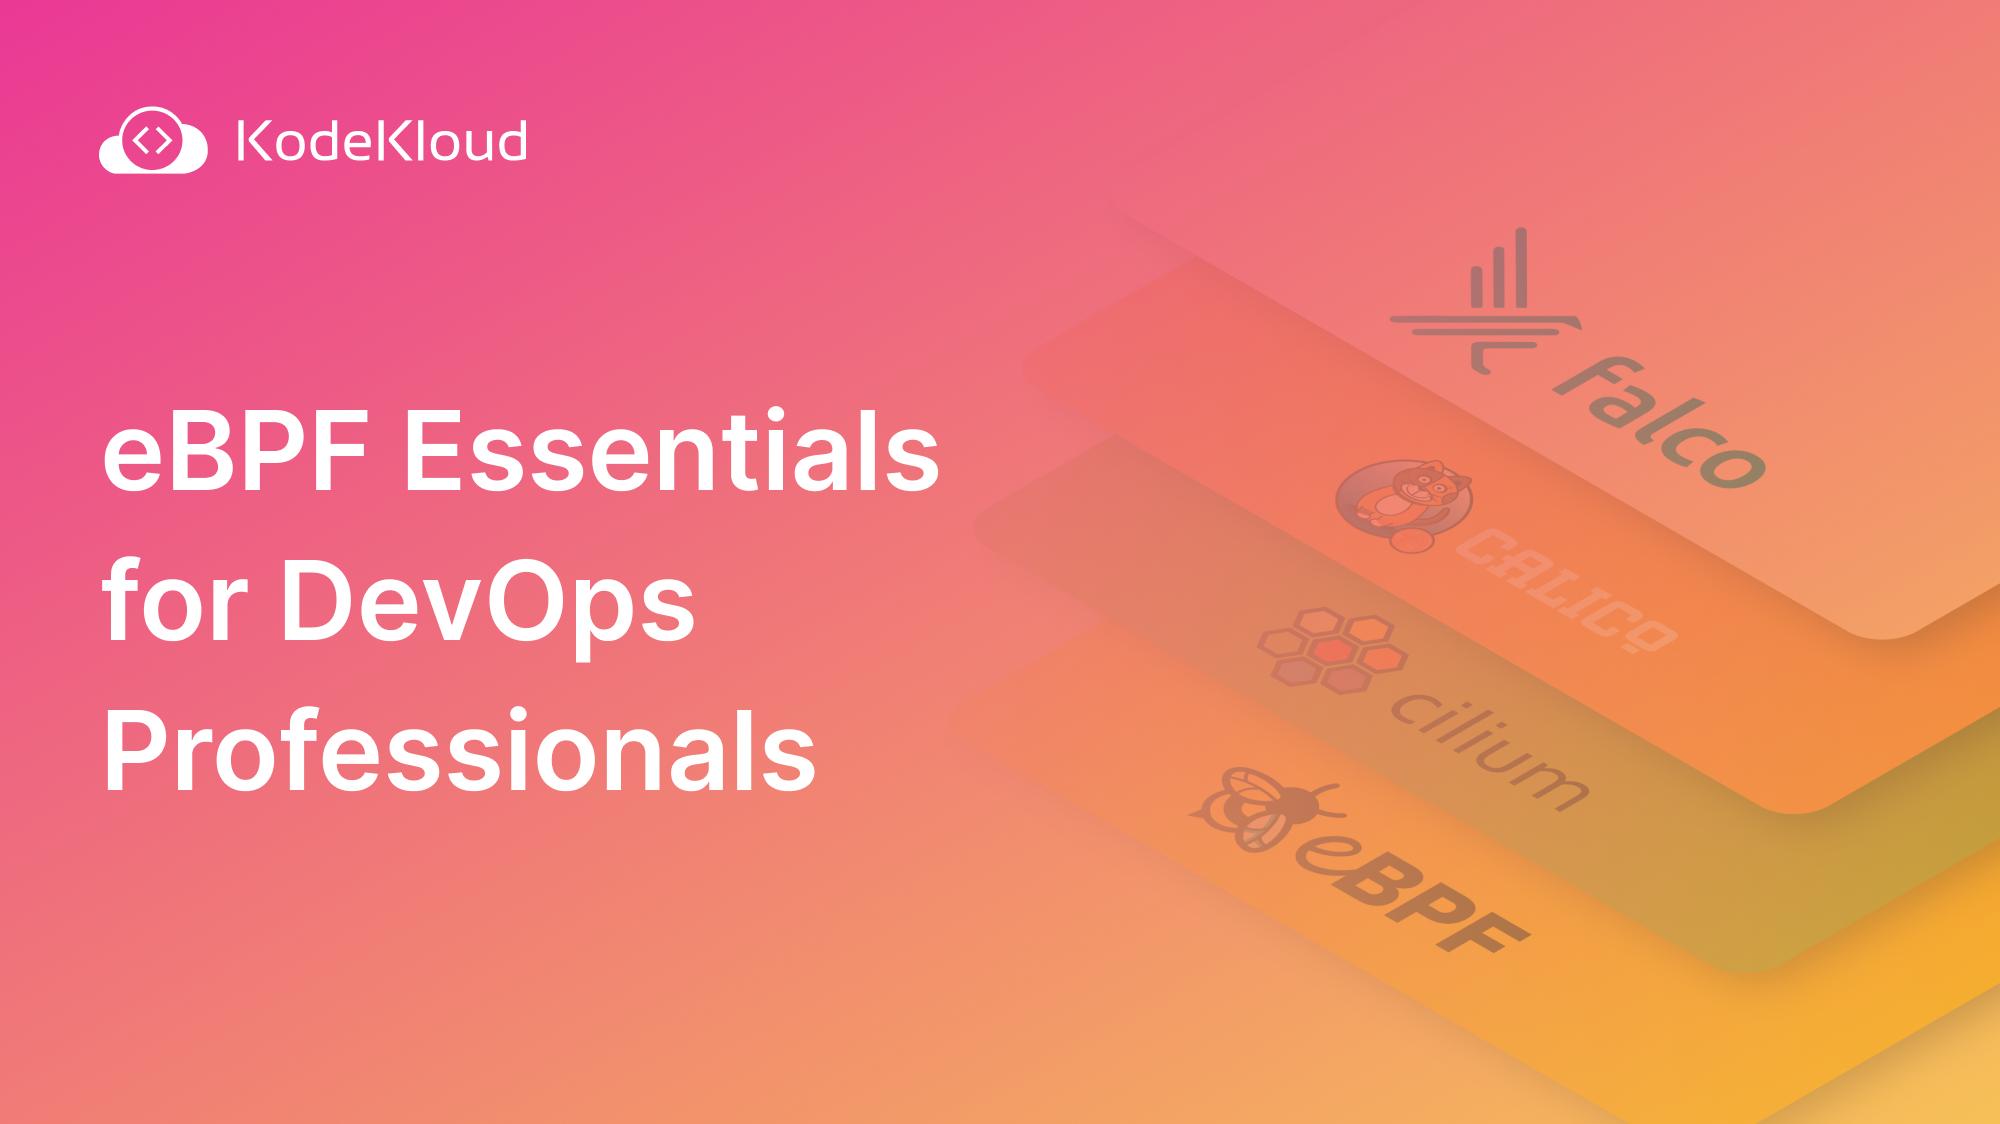 eBPF Essentials for DevOps Professionals